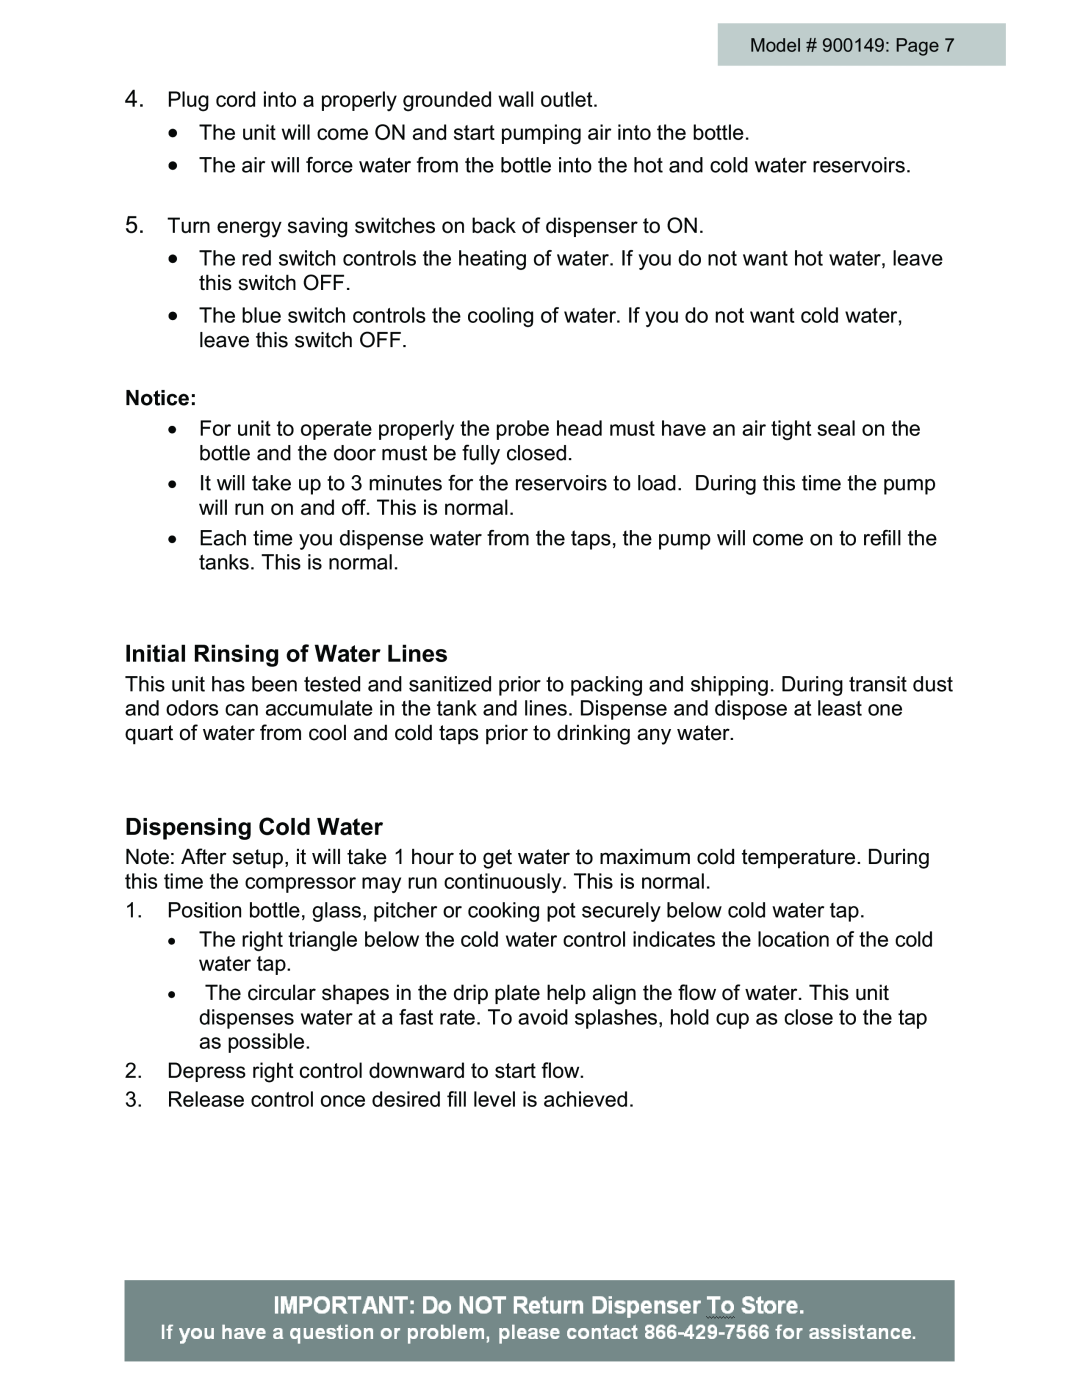 Black & Decker # 900149 user manual Initial Rinsing of Water Lines, Dispensing Cold Water 